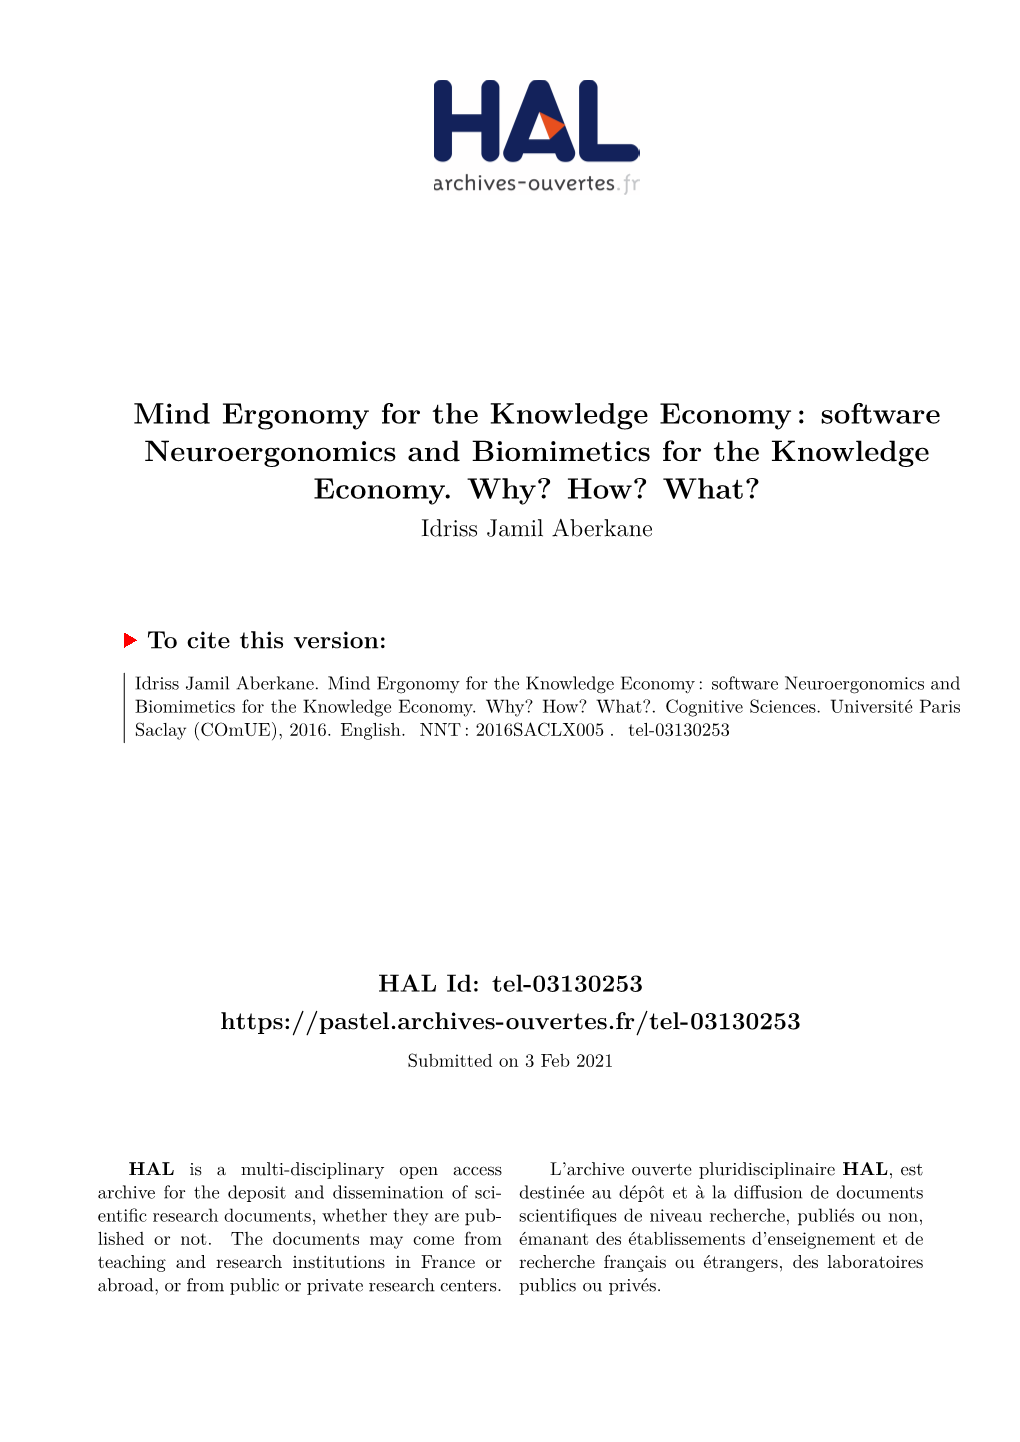 Mind Ergonomy for the Knowledge Economy : Software Neuroergonomics and Biomimetics for the Knowledge Economy